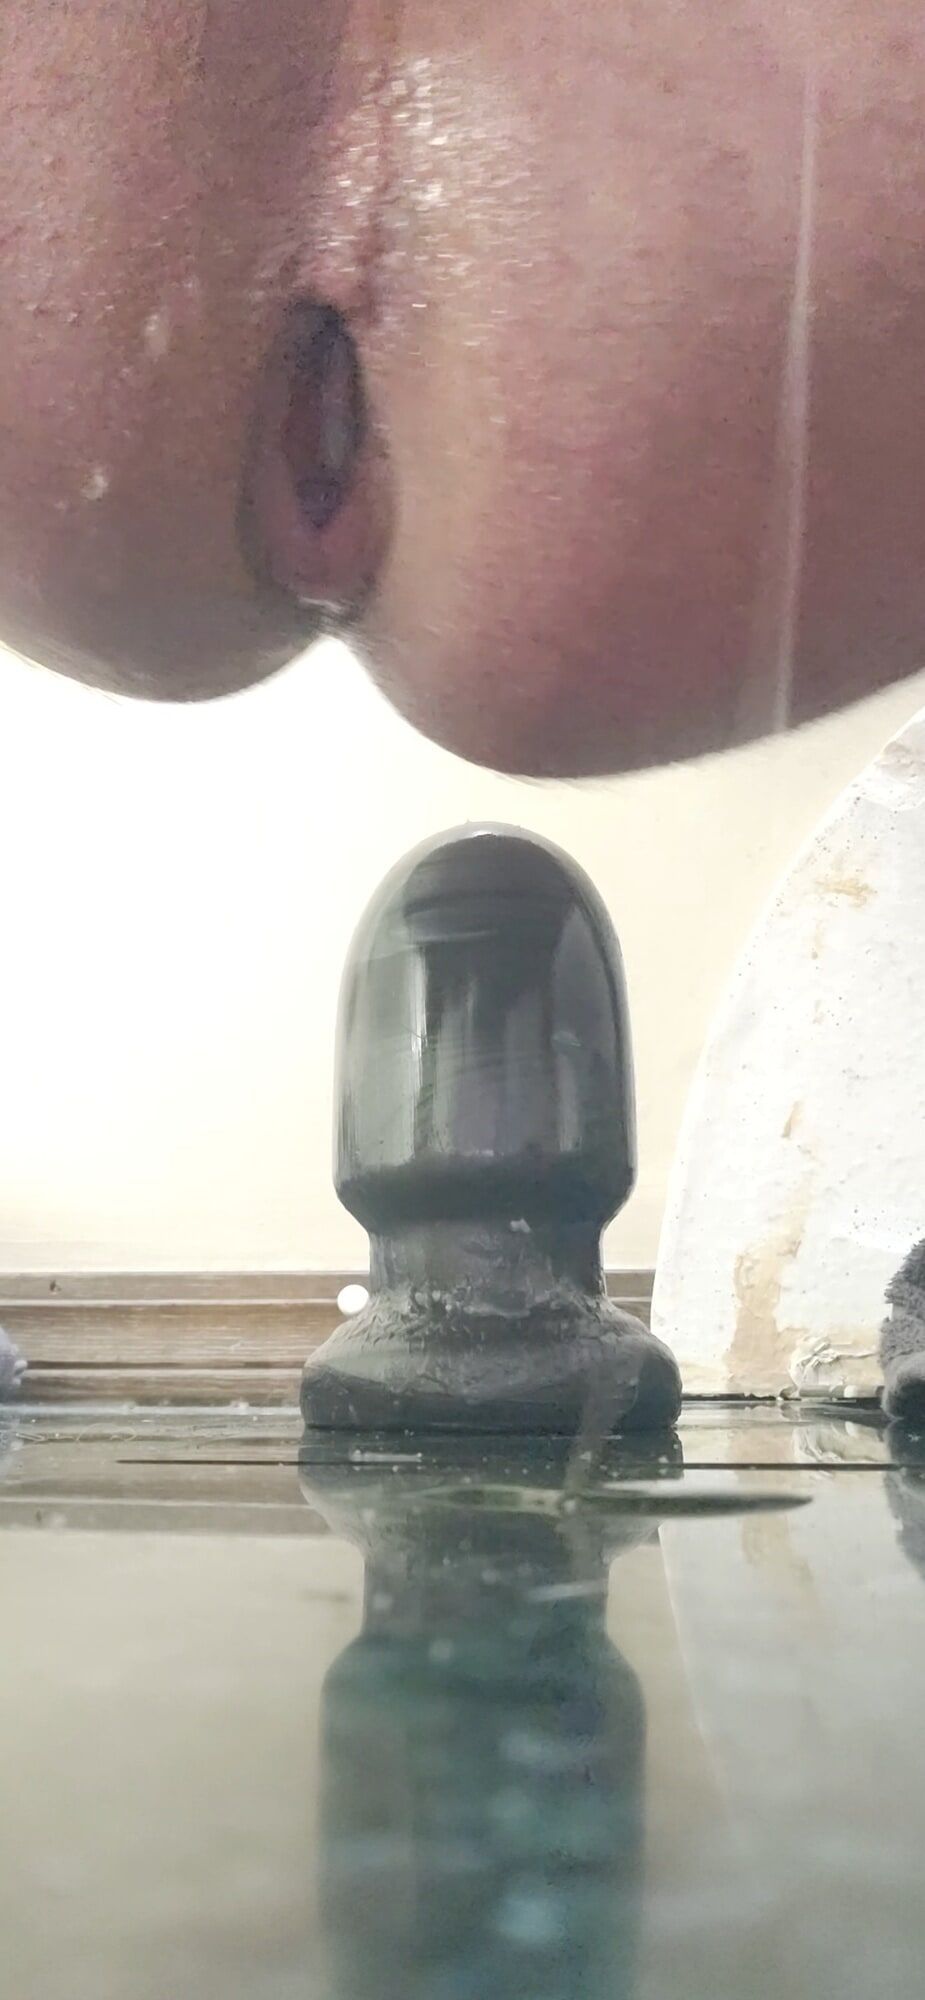 Presume dripping cock huge anal plug #21